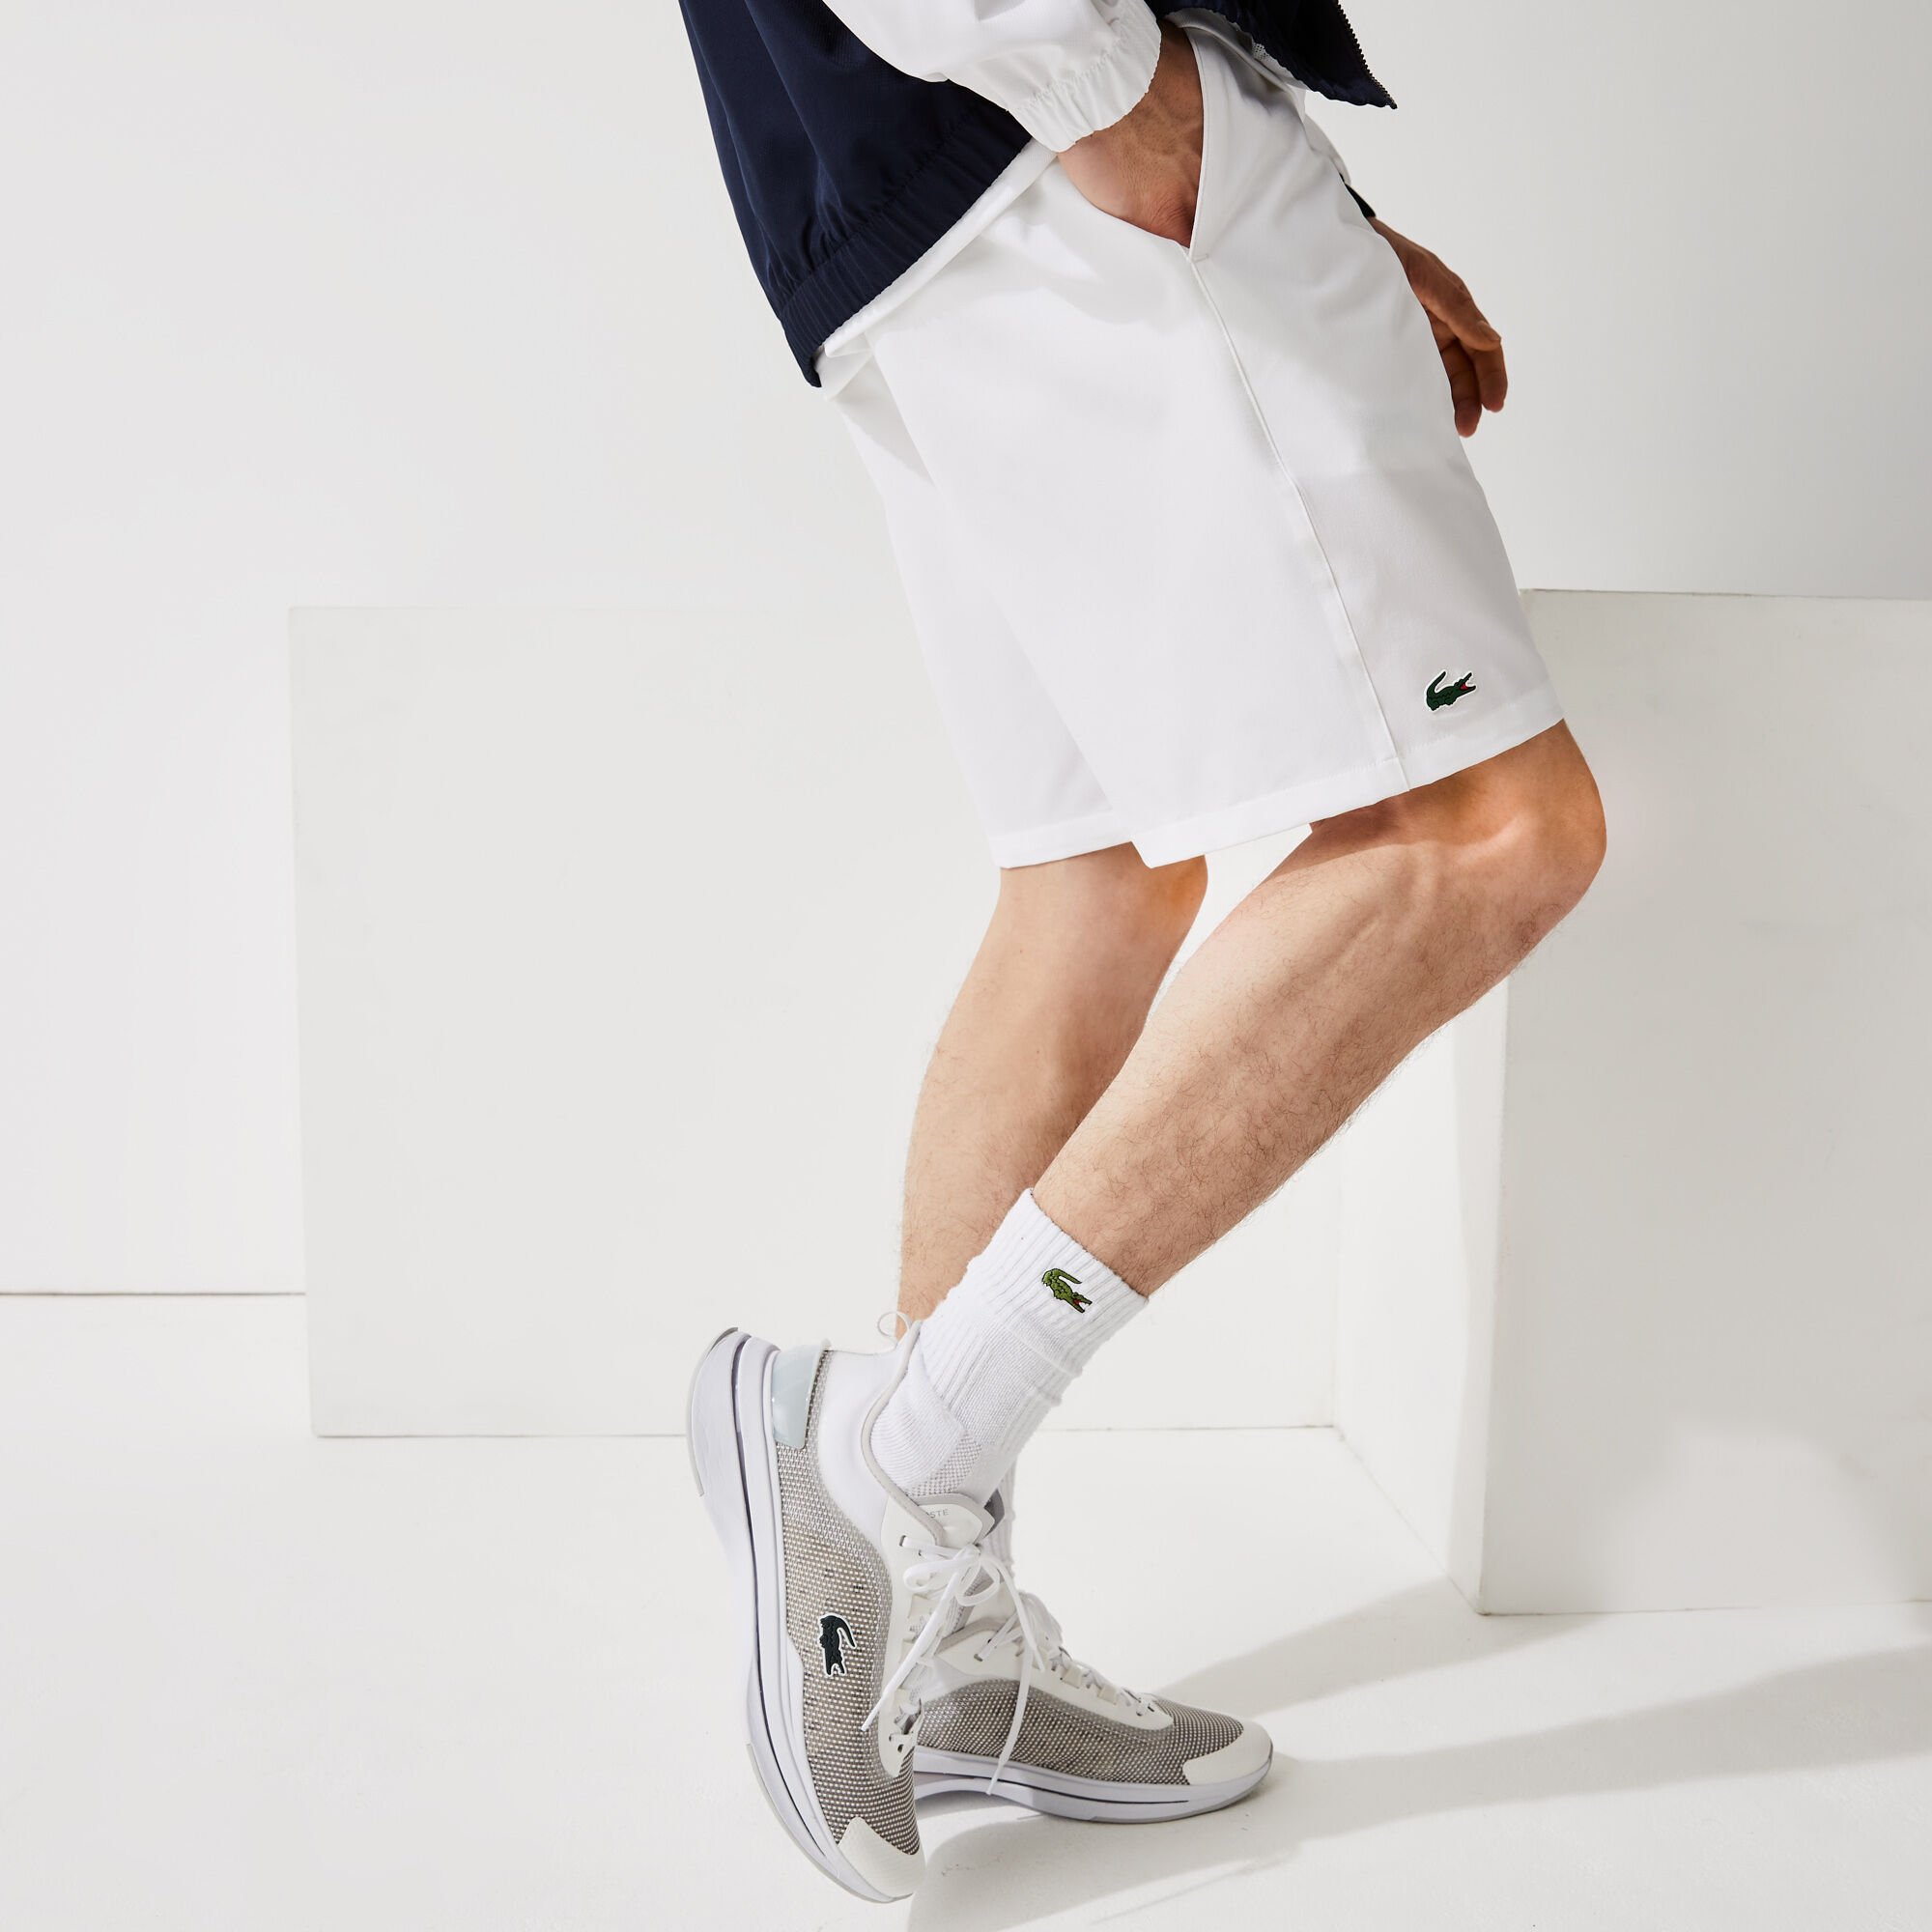 Men's Lacoste SPORT Tennis Stretch Shorts